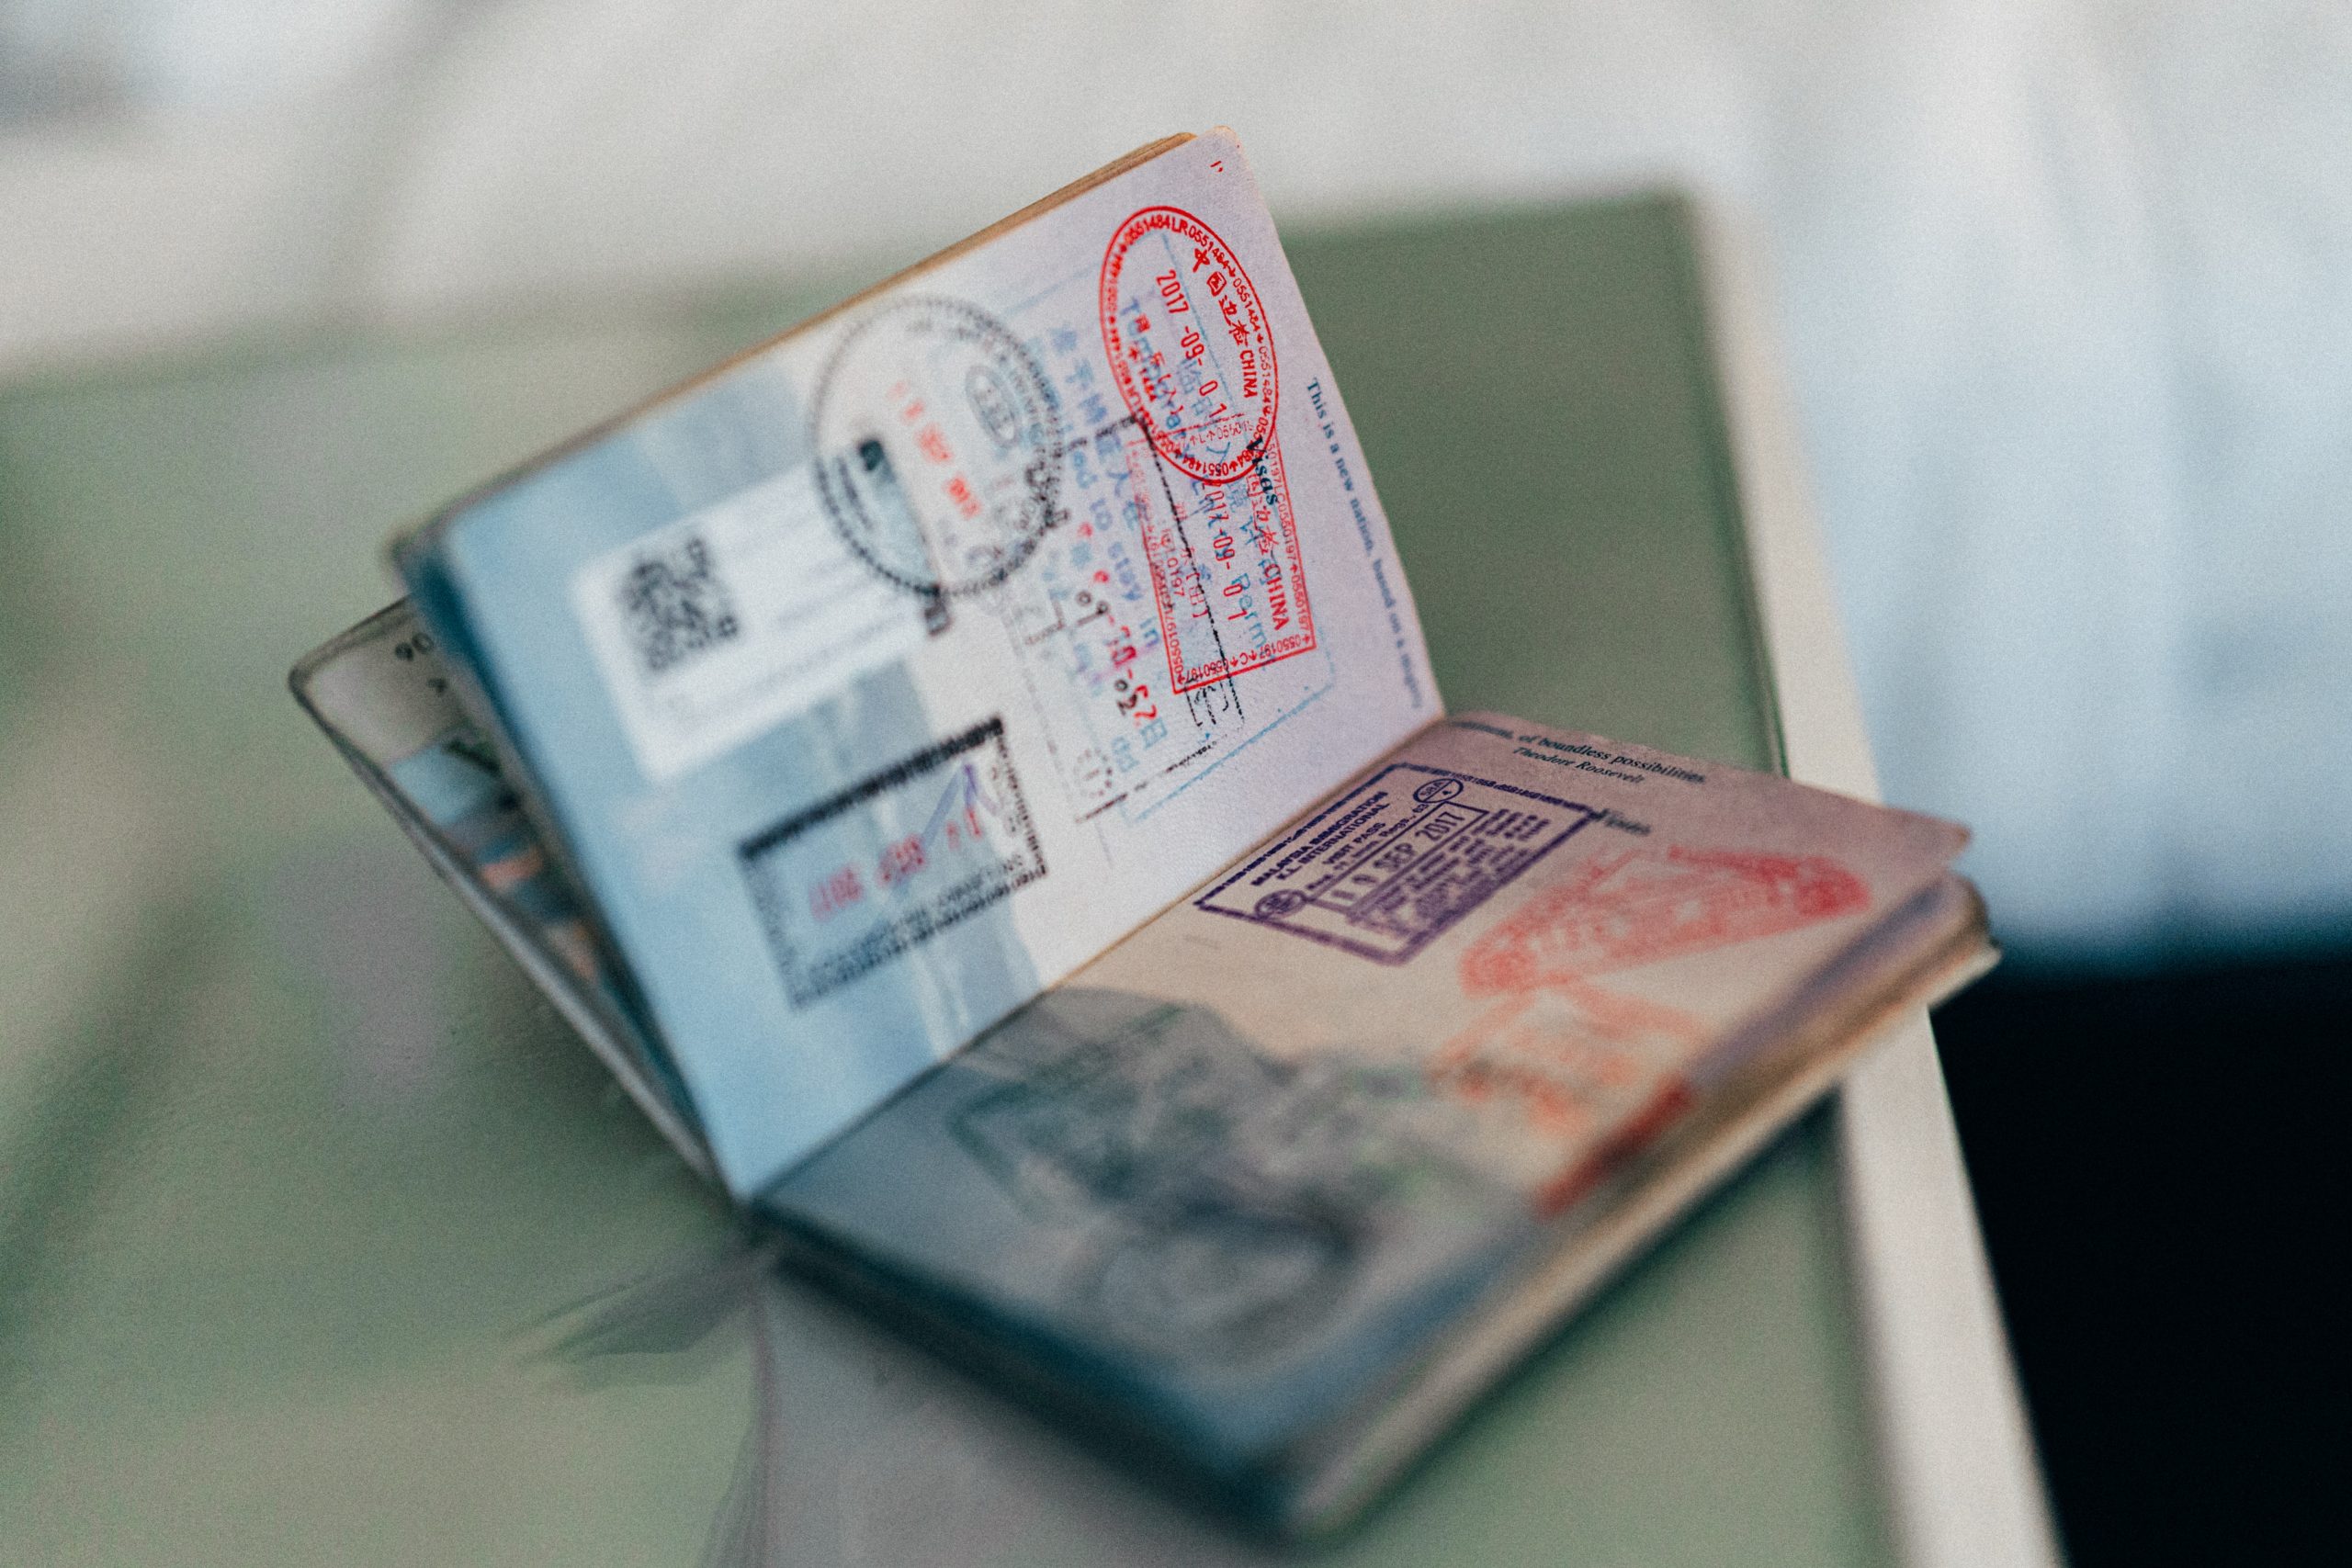 immigration visa sticker on a passport